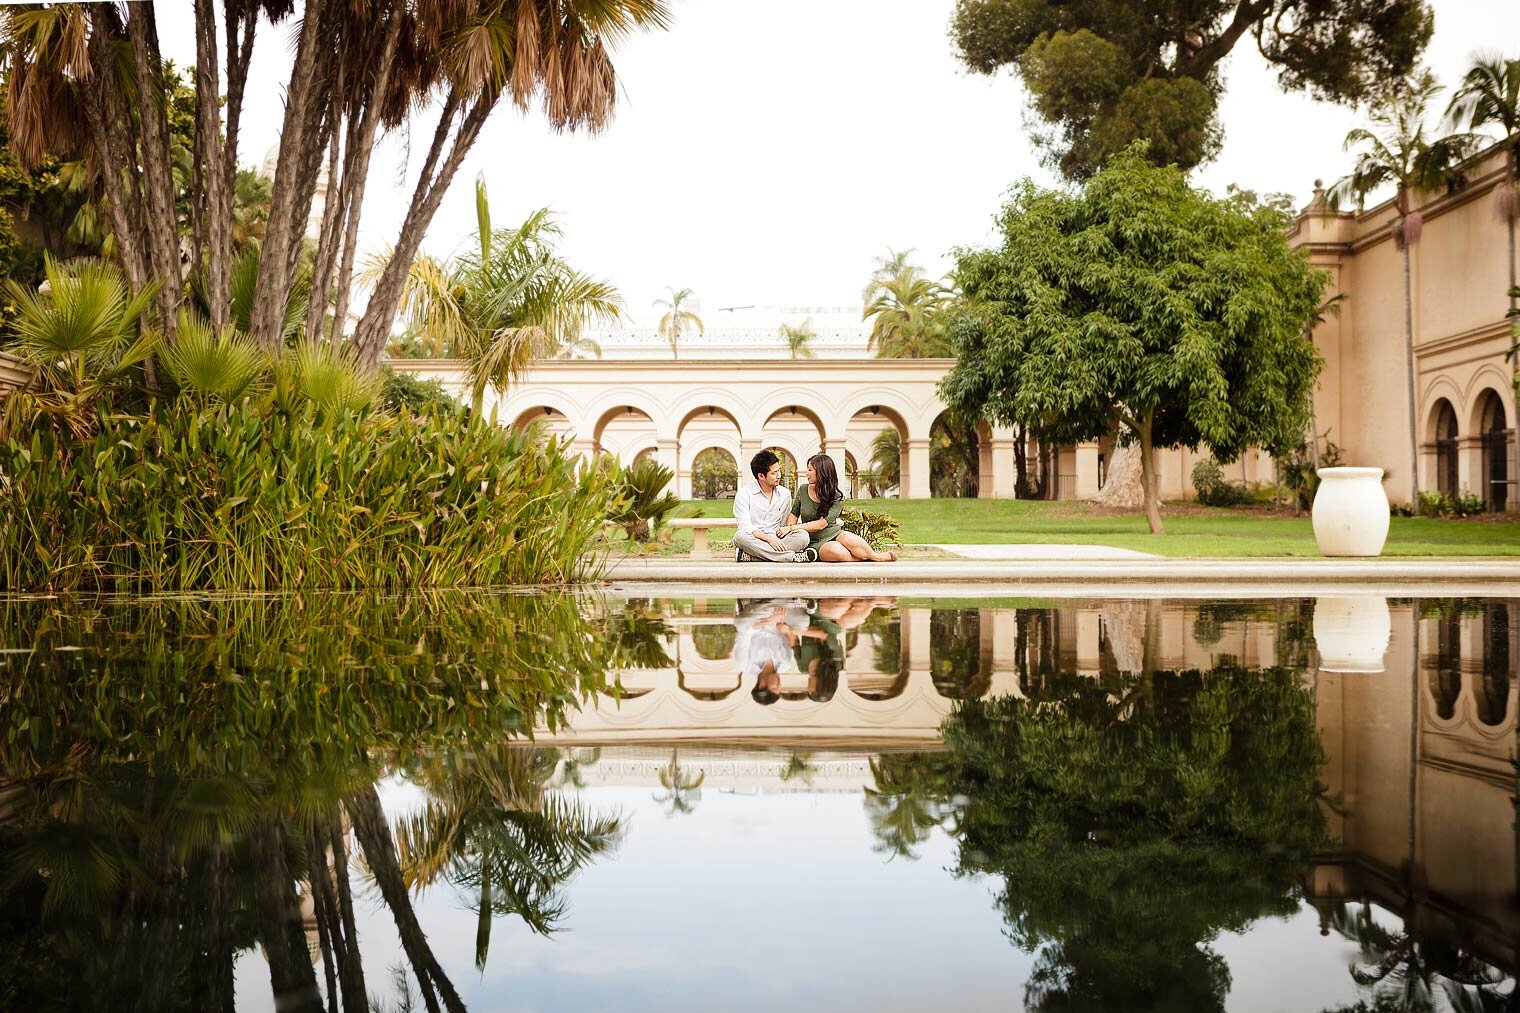 003-san-diego-balboa-park-engagement-session-wedding-photo-journalism